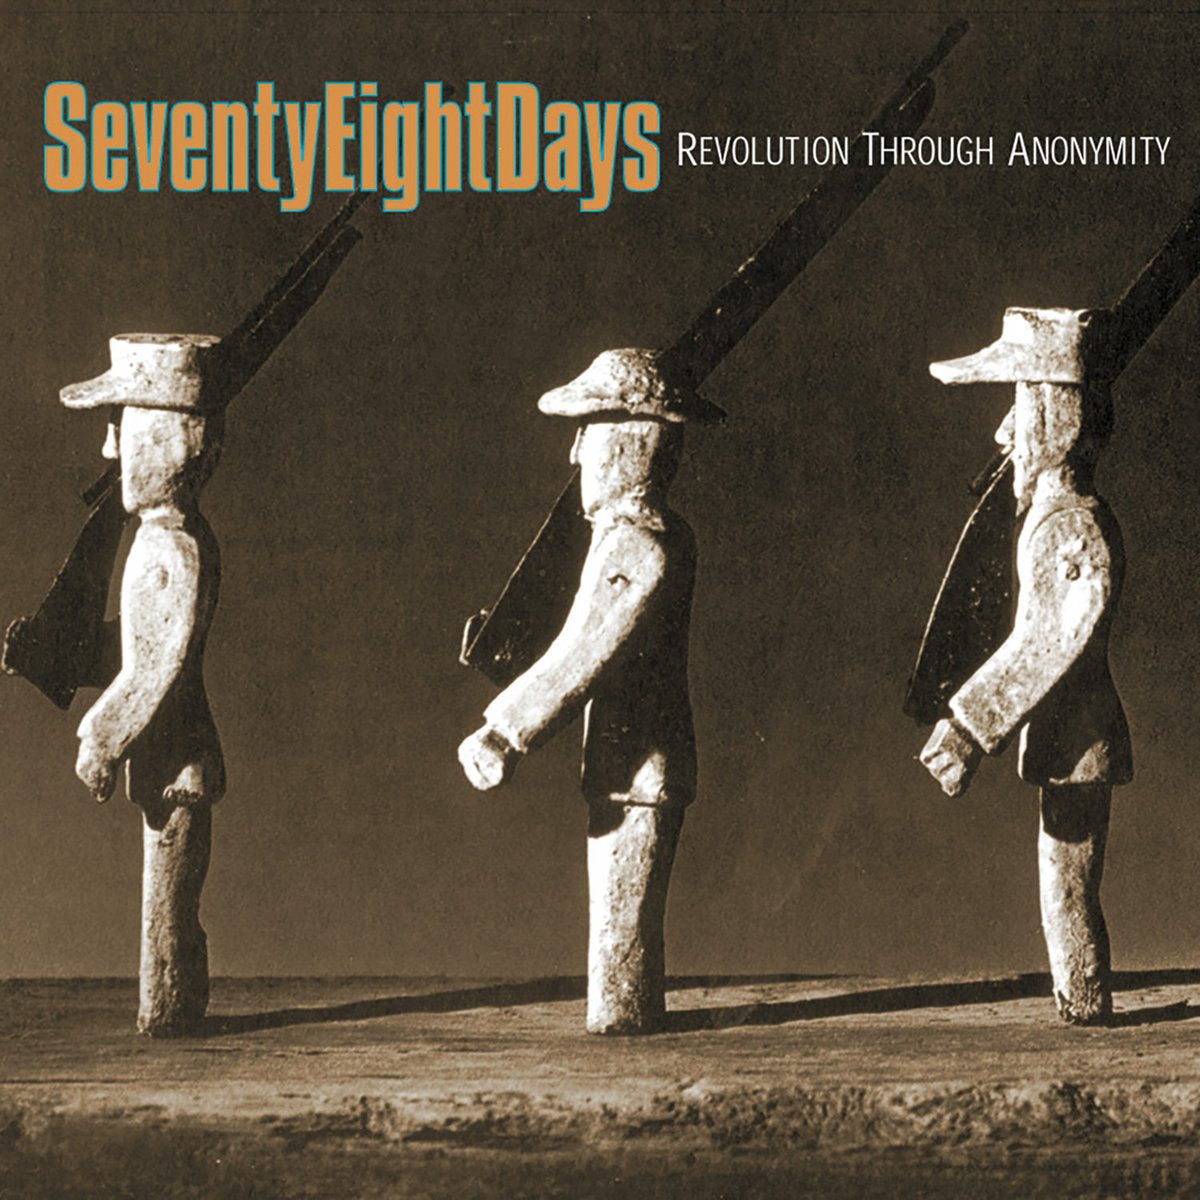 SeventyEightDays "Revolution Through Anonymity" 7" Vinyl